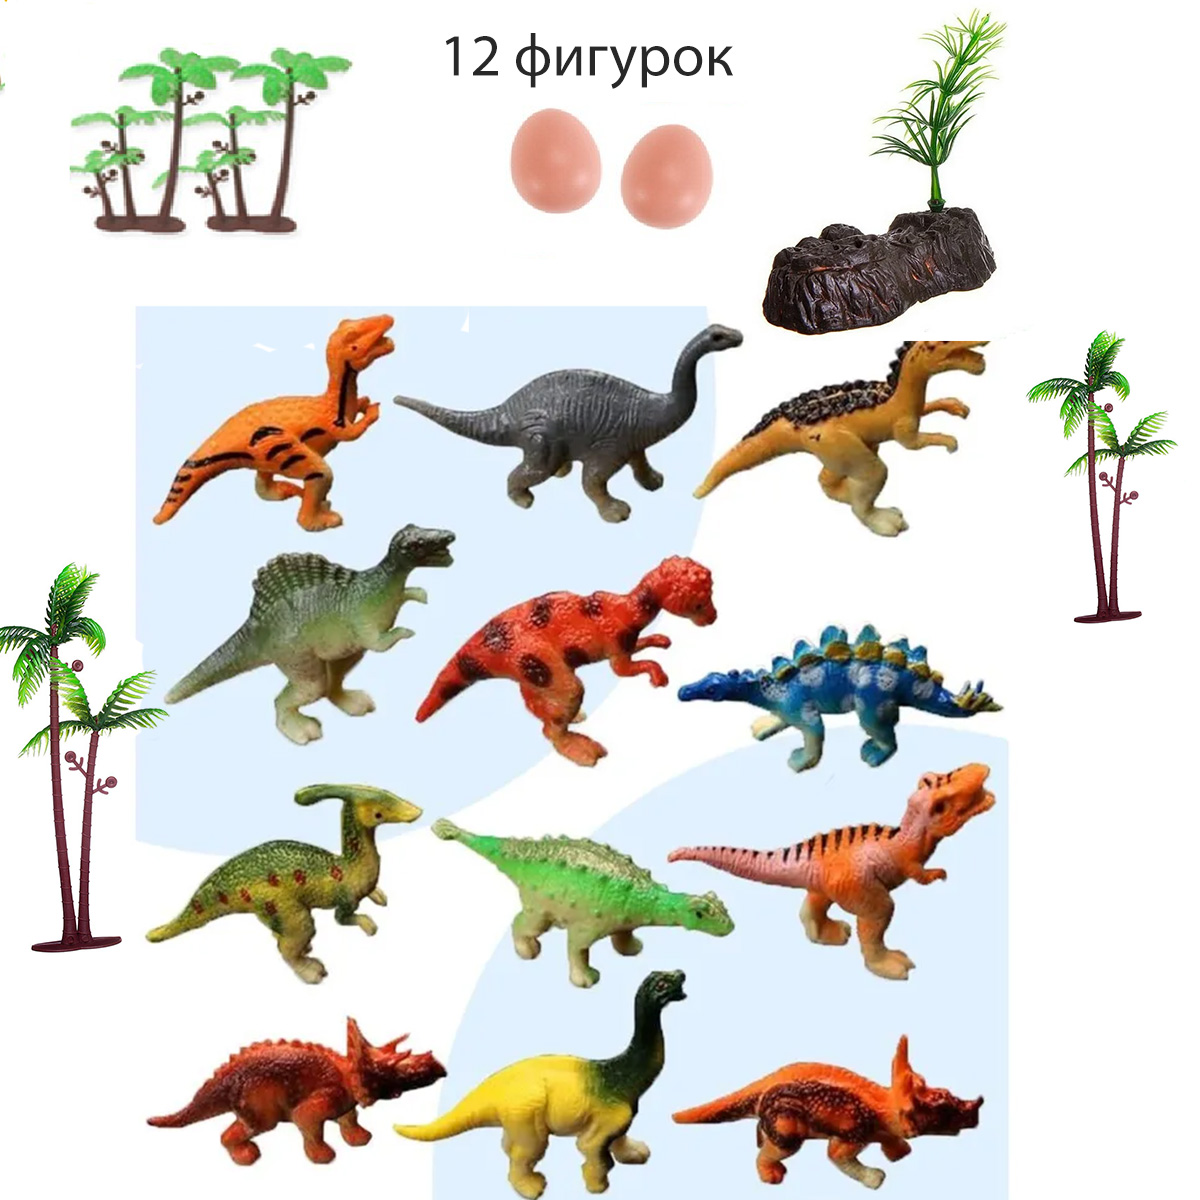 Набор фигурок Динозавр lego раскопки, 12 шт